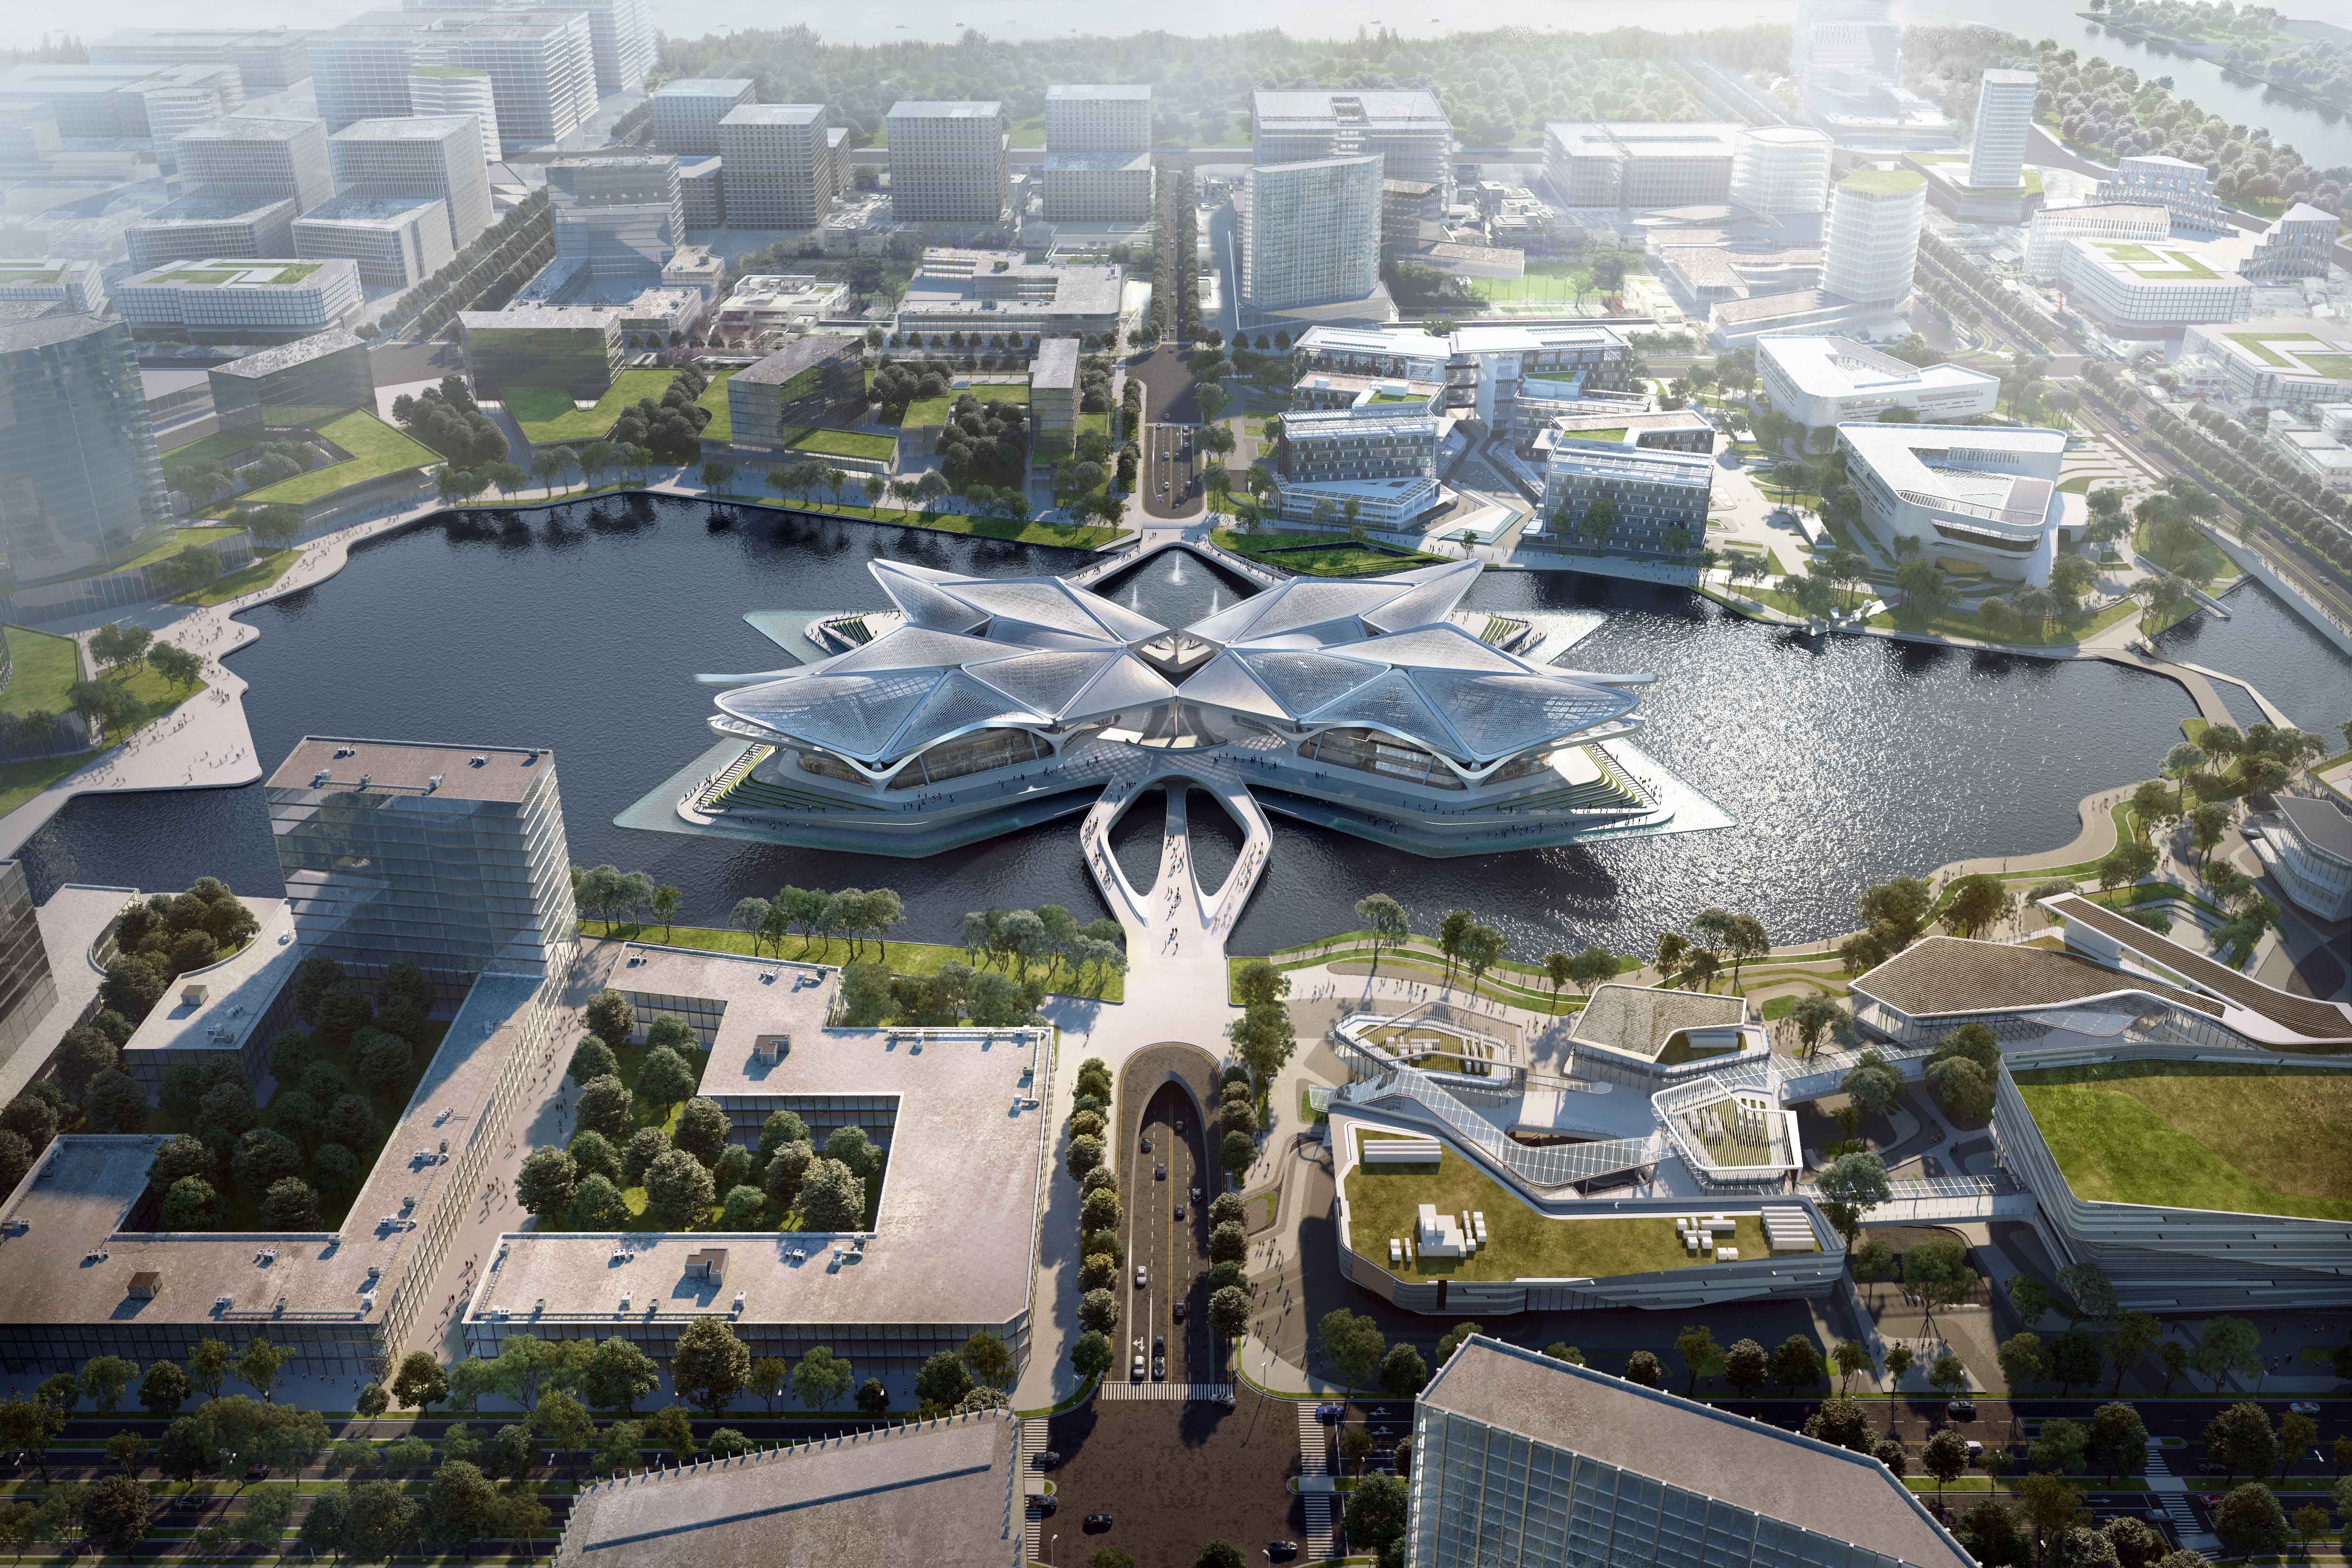 Zhuhai Jinwan Civic Art Center, a future architecture to exhibit Chinese arts